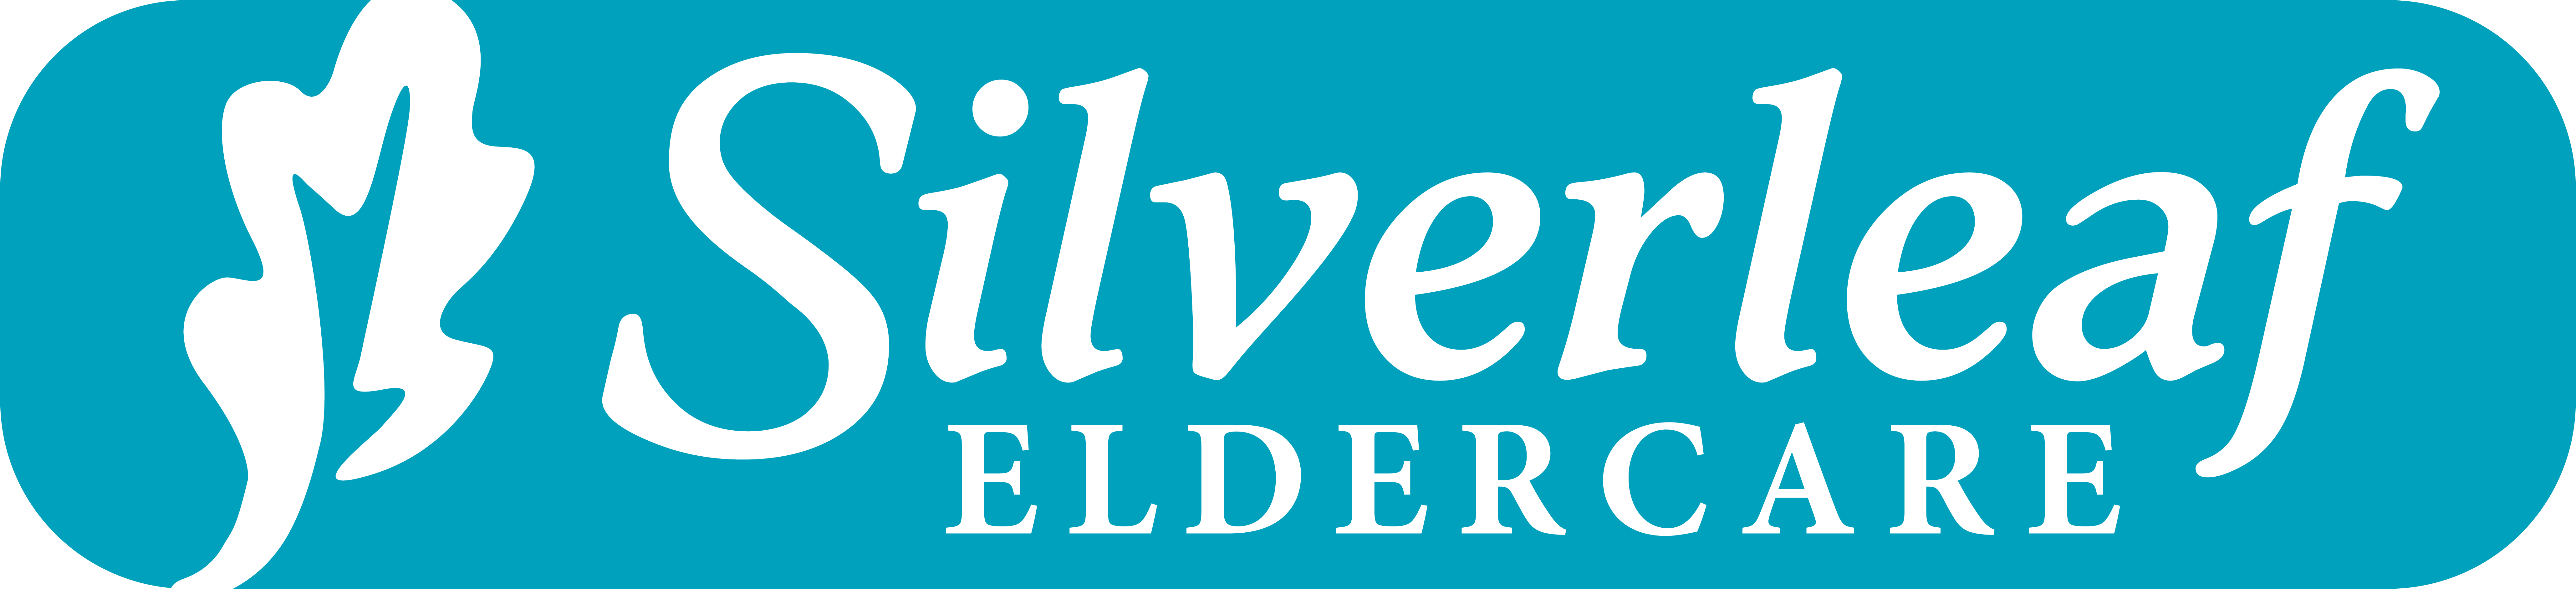 Silverleaf Eldercare